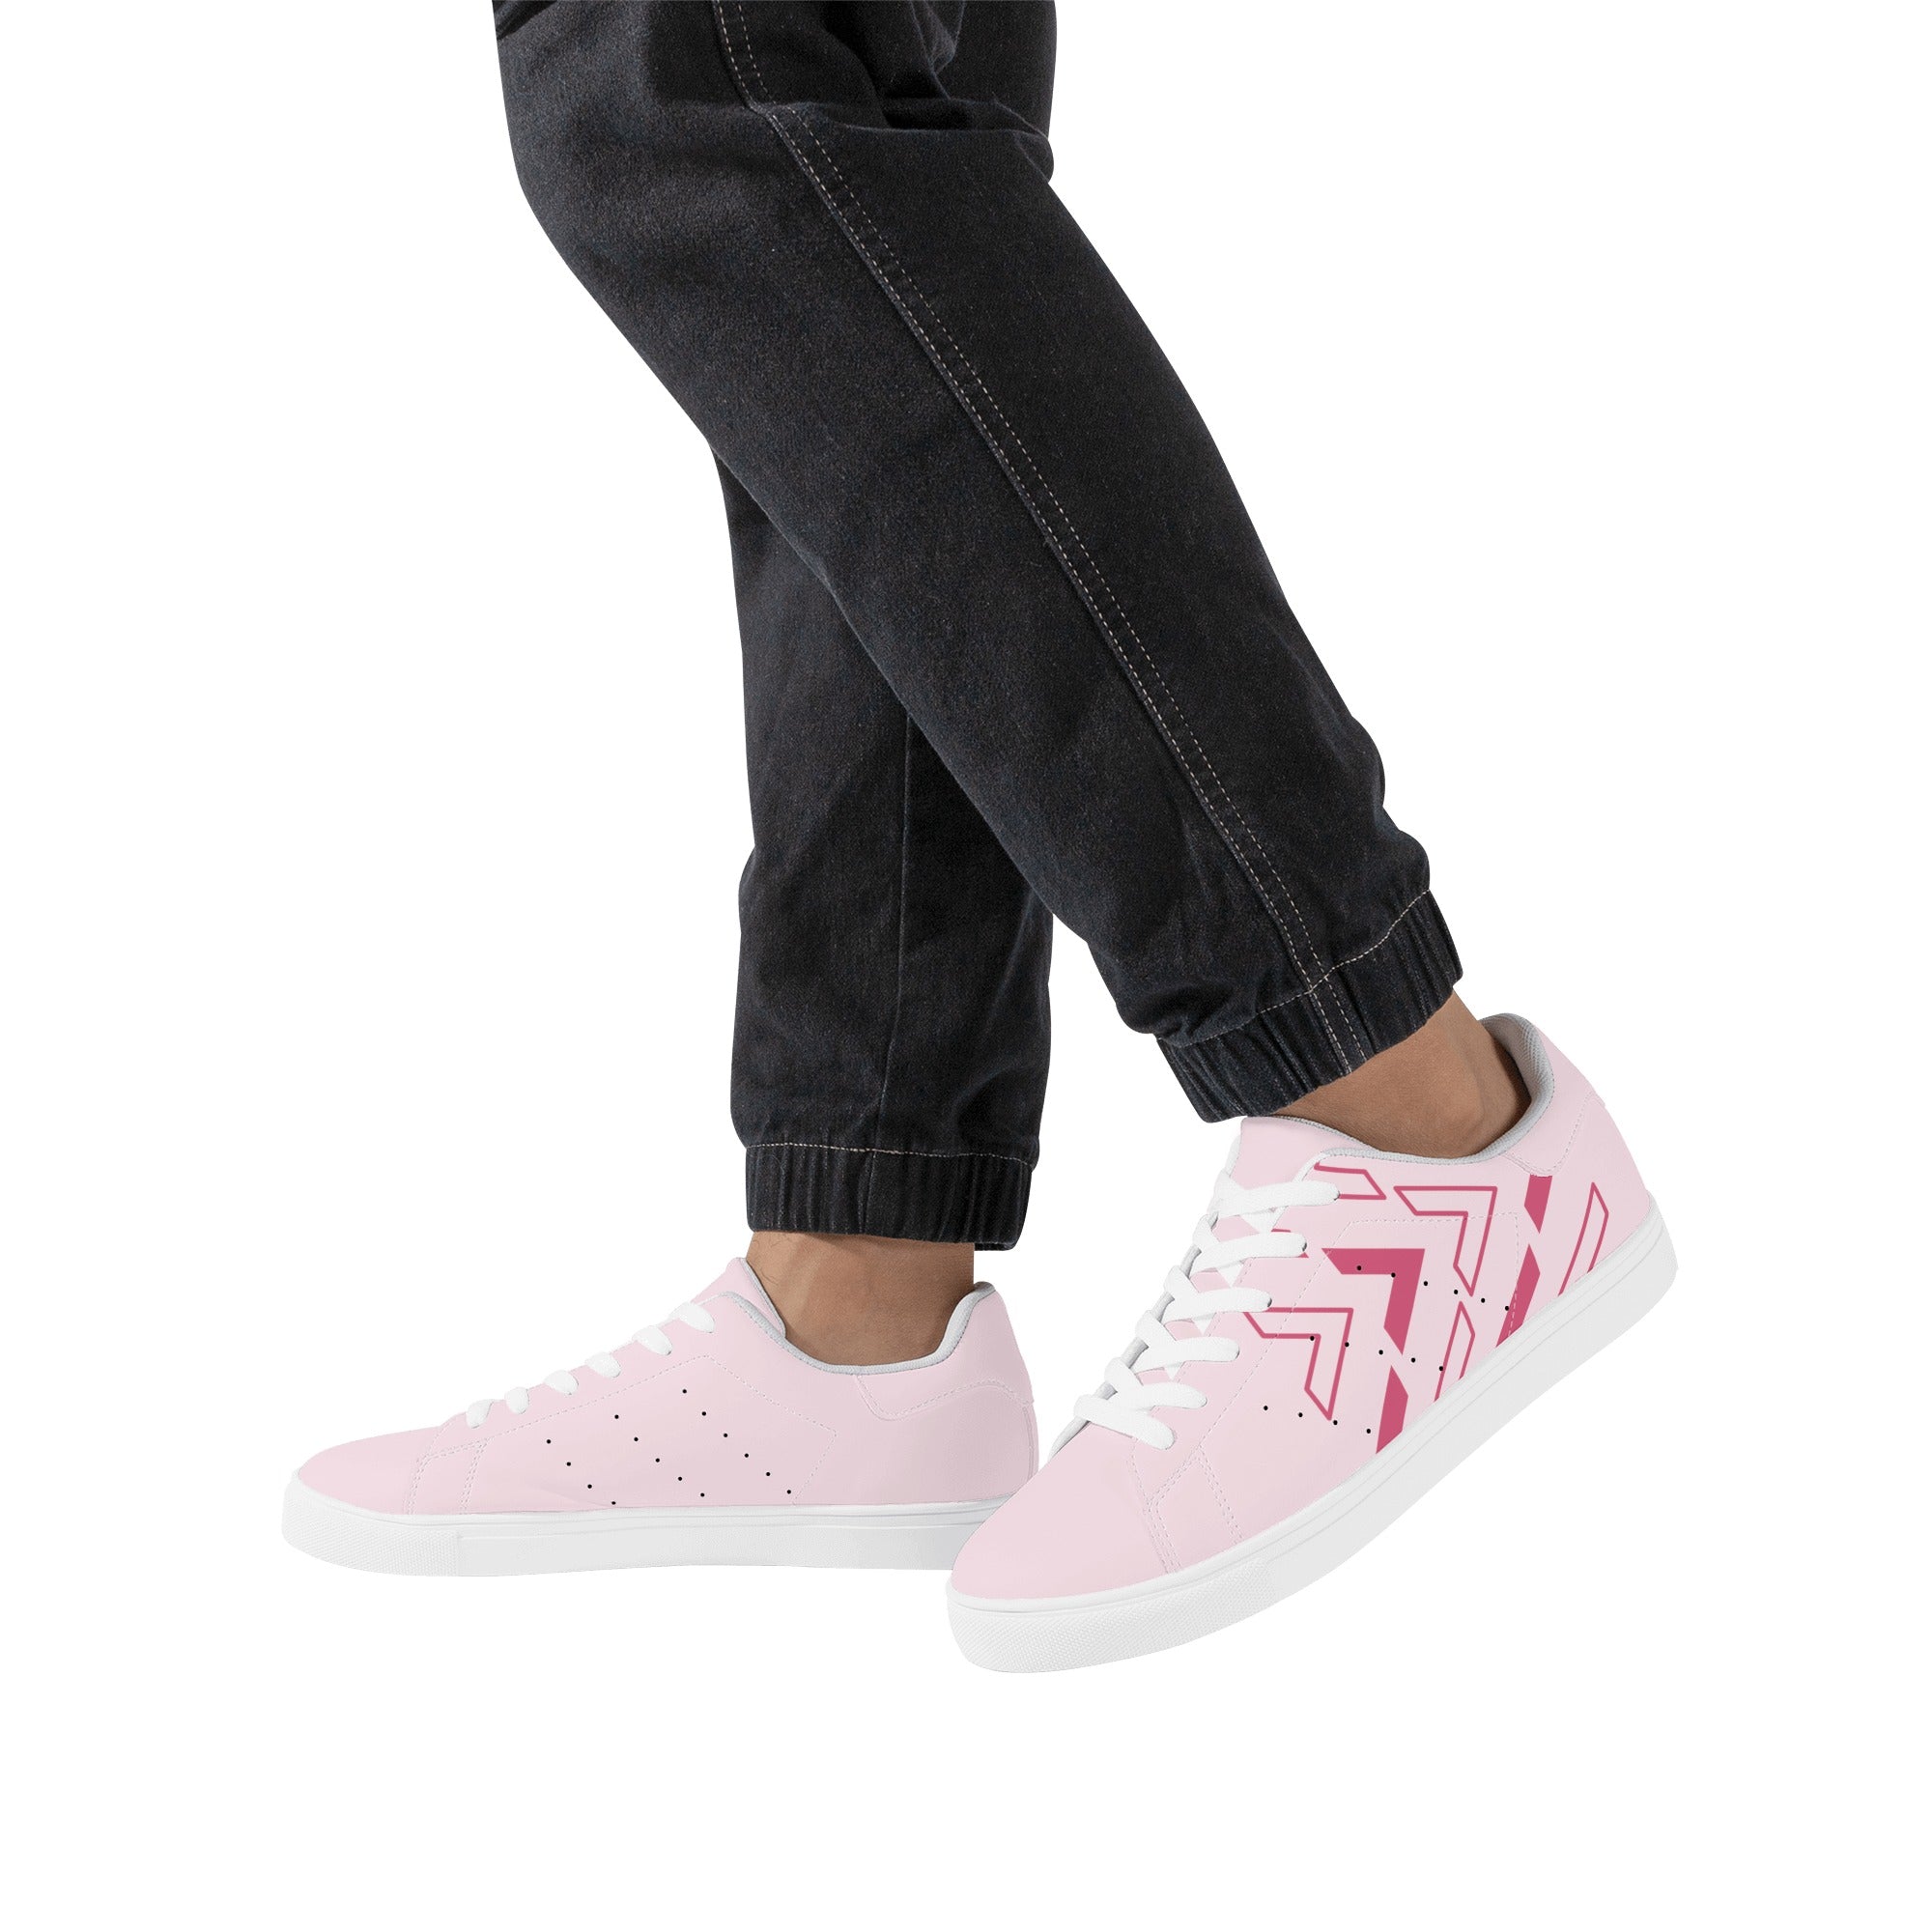 Zumba Shoes | Exercise Themed Customized Sneakers | Shoe Zero